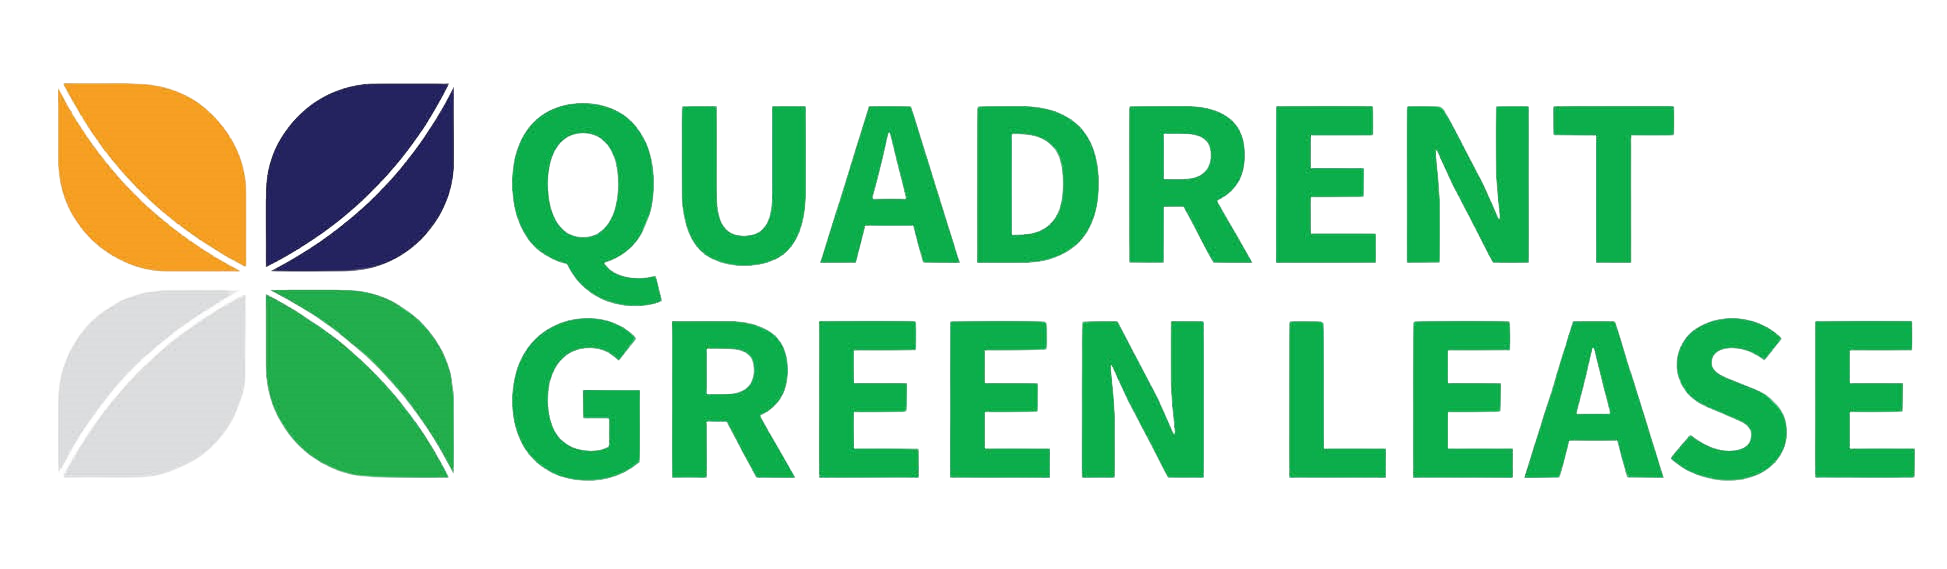 Quadrent Green Lease Logo - No BG